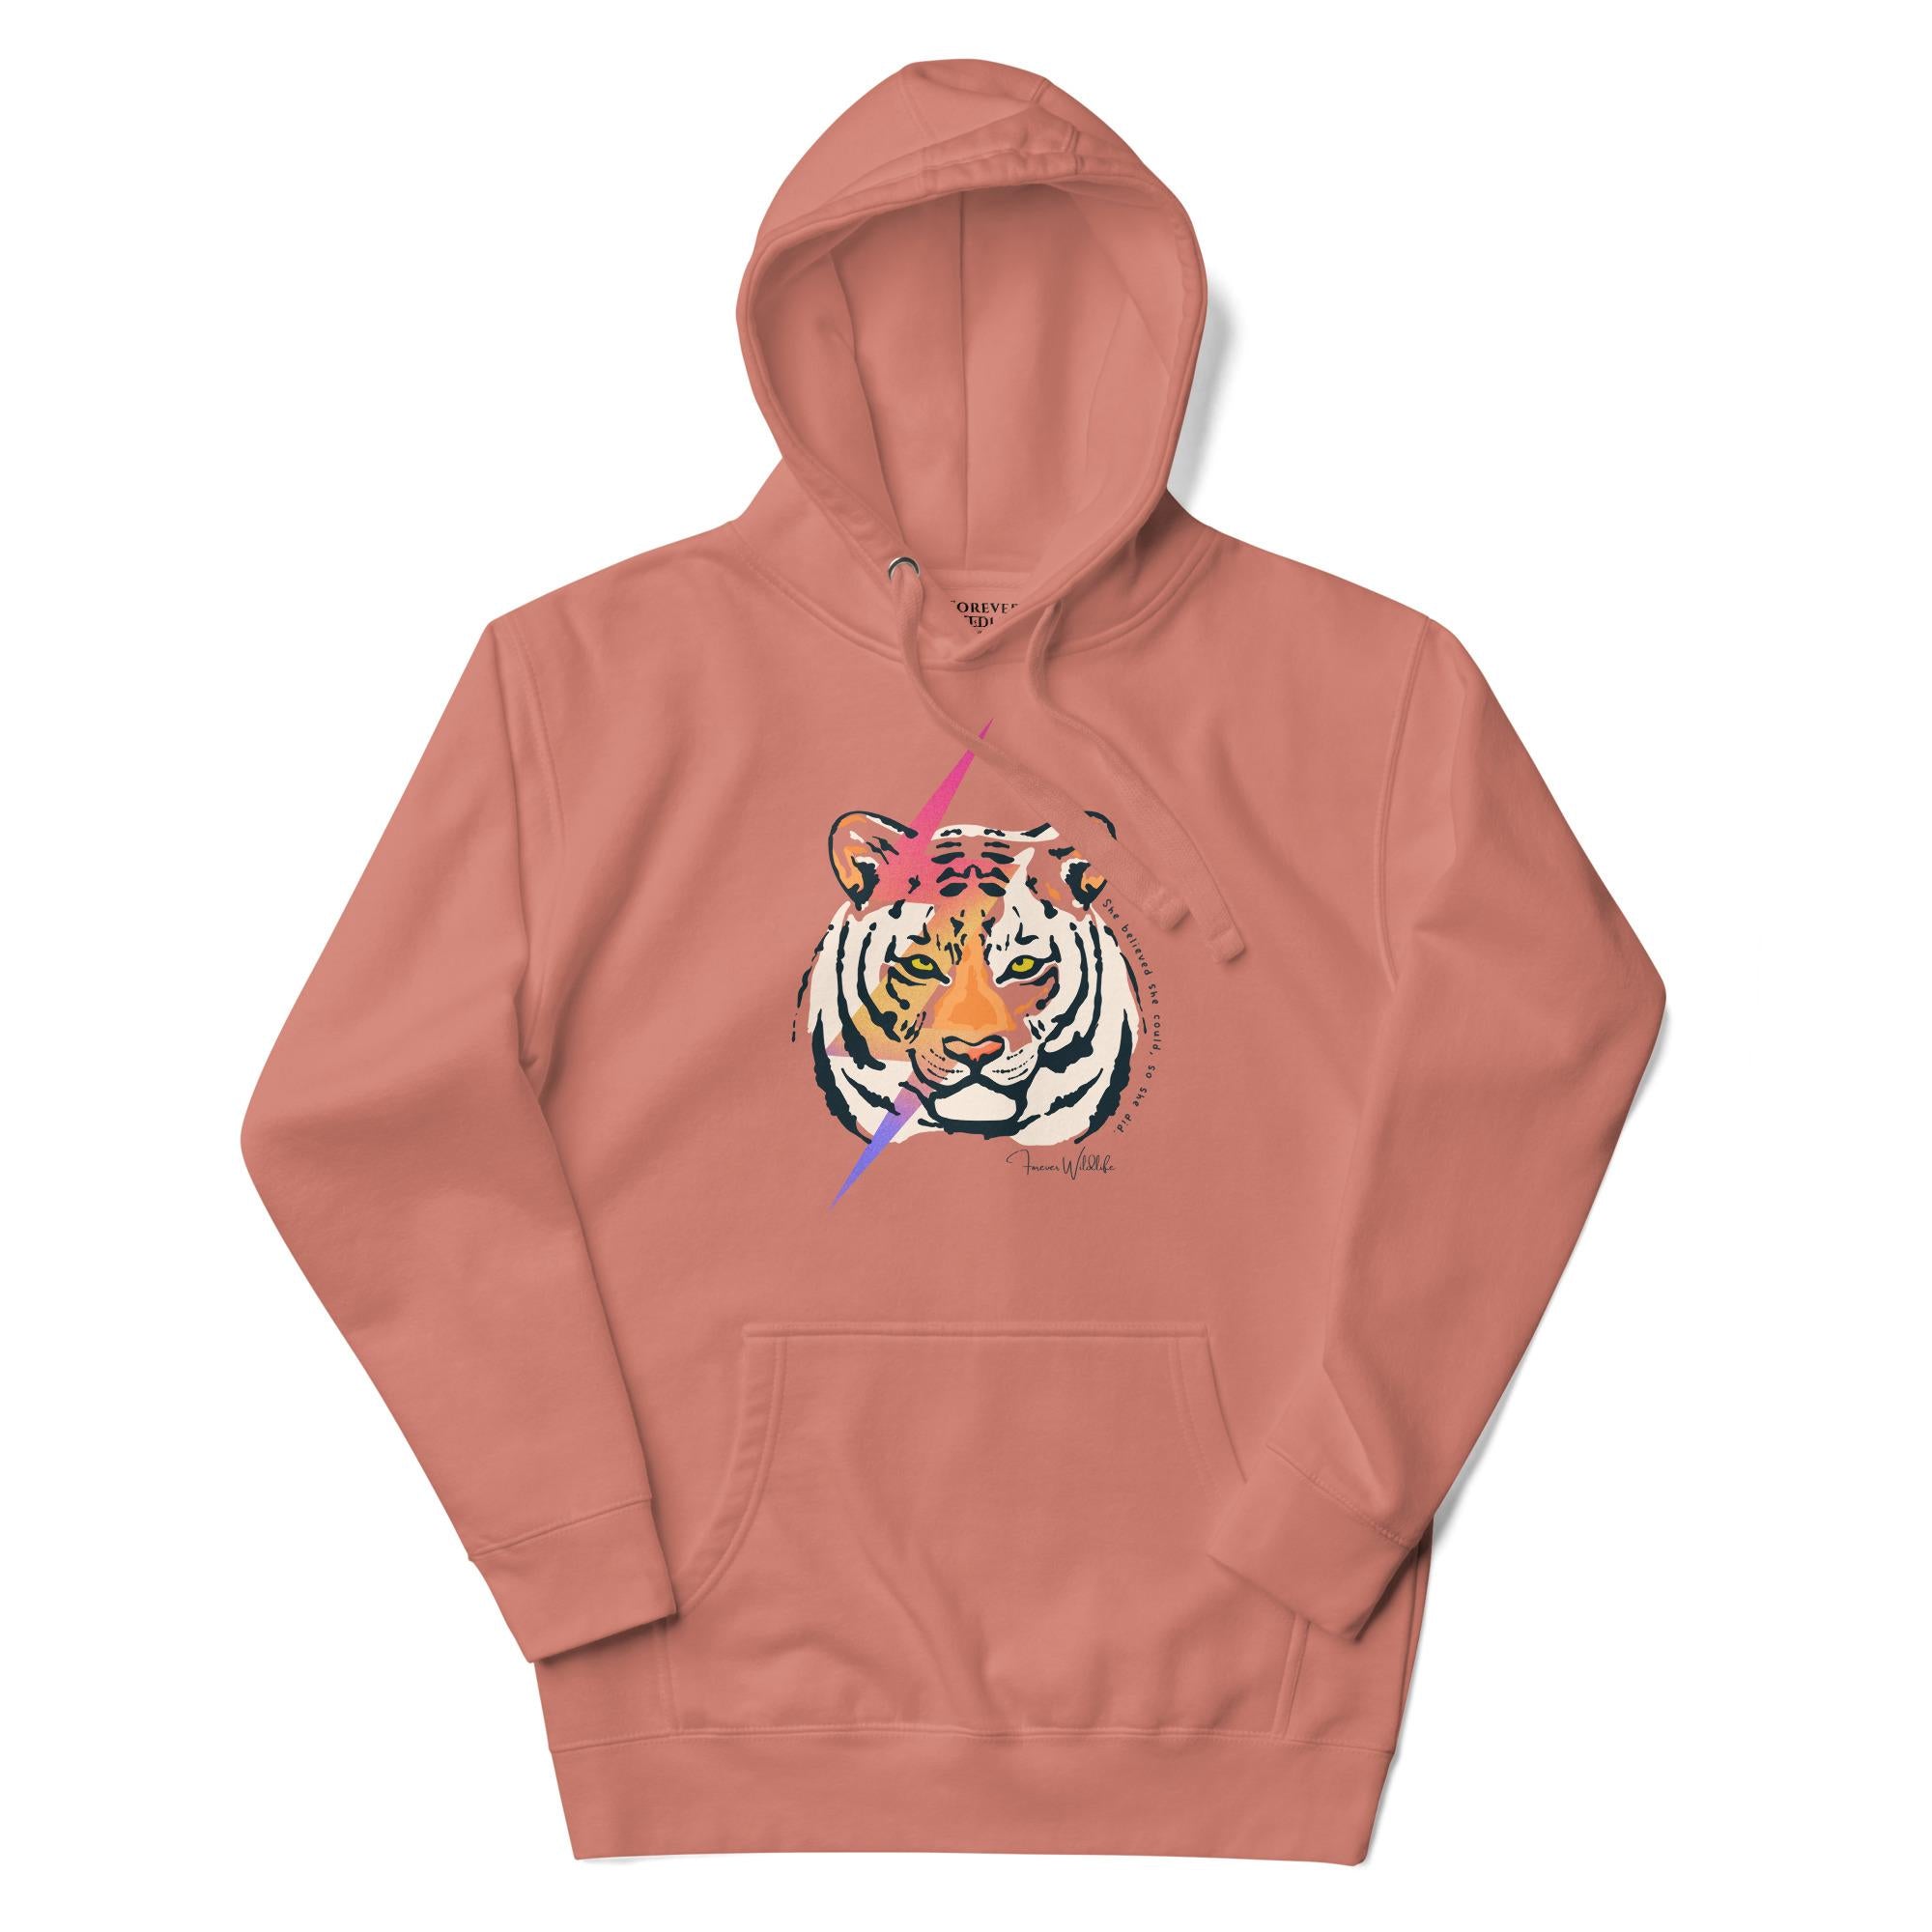 Tiger Hoodie in Dusty Rose – Premium Wildlife Animal Inspirational Hoodie Design, part of Wildlife Hoodies & Clothing from Forever Wildlife